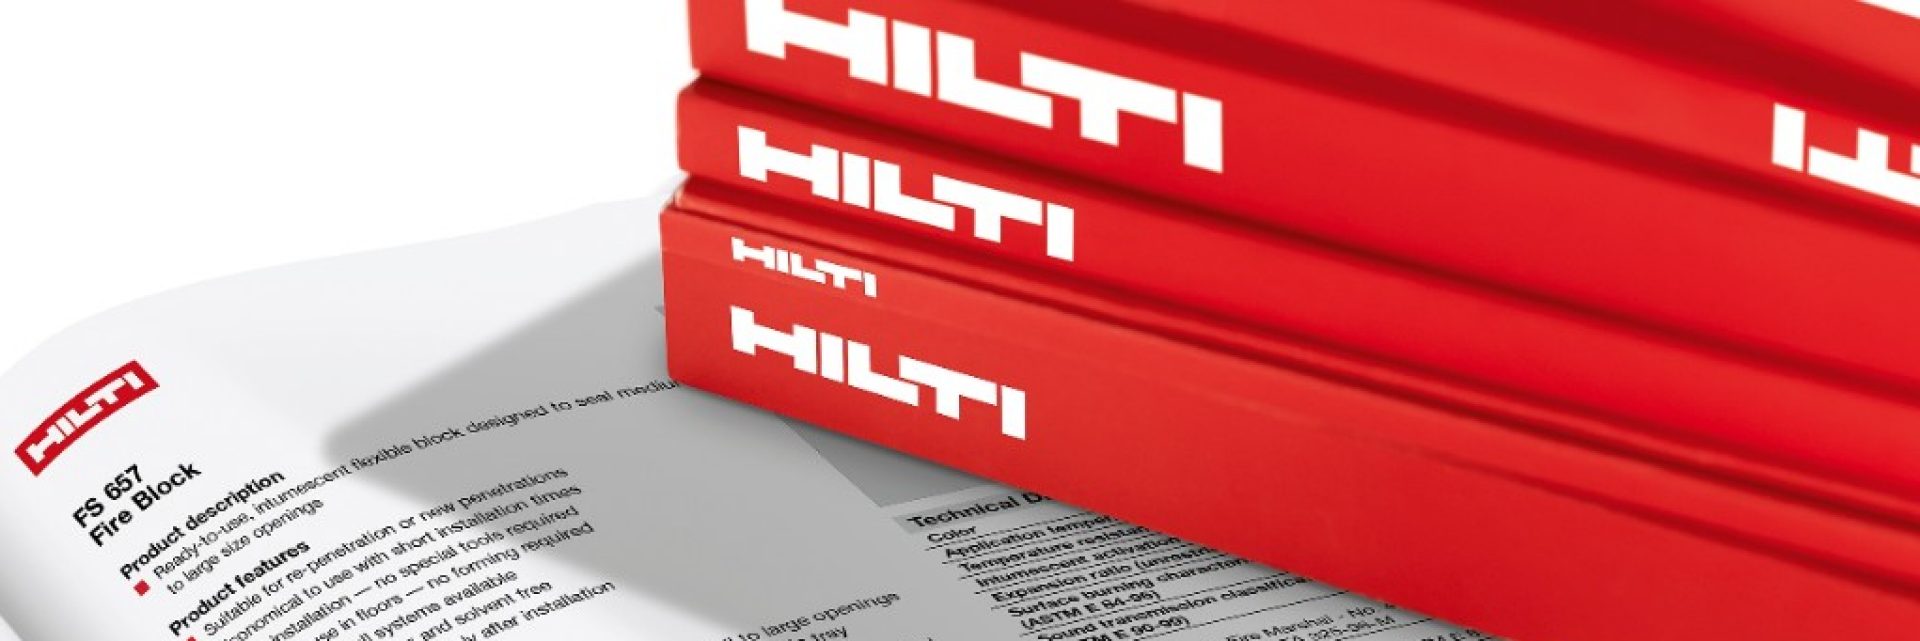 Hilti technical literature for fire protection